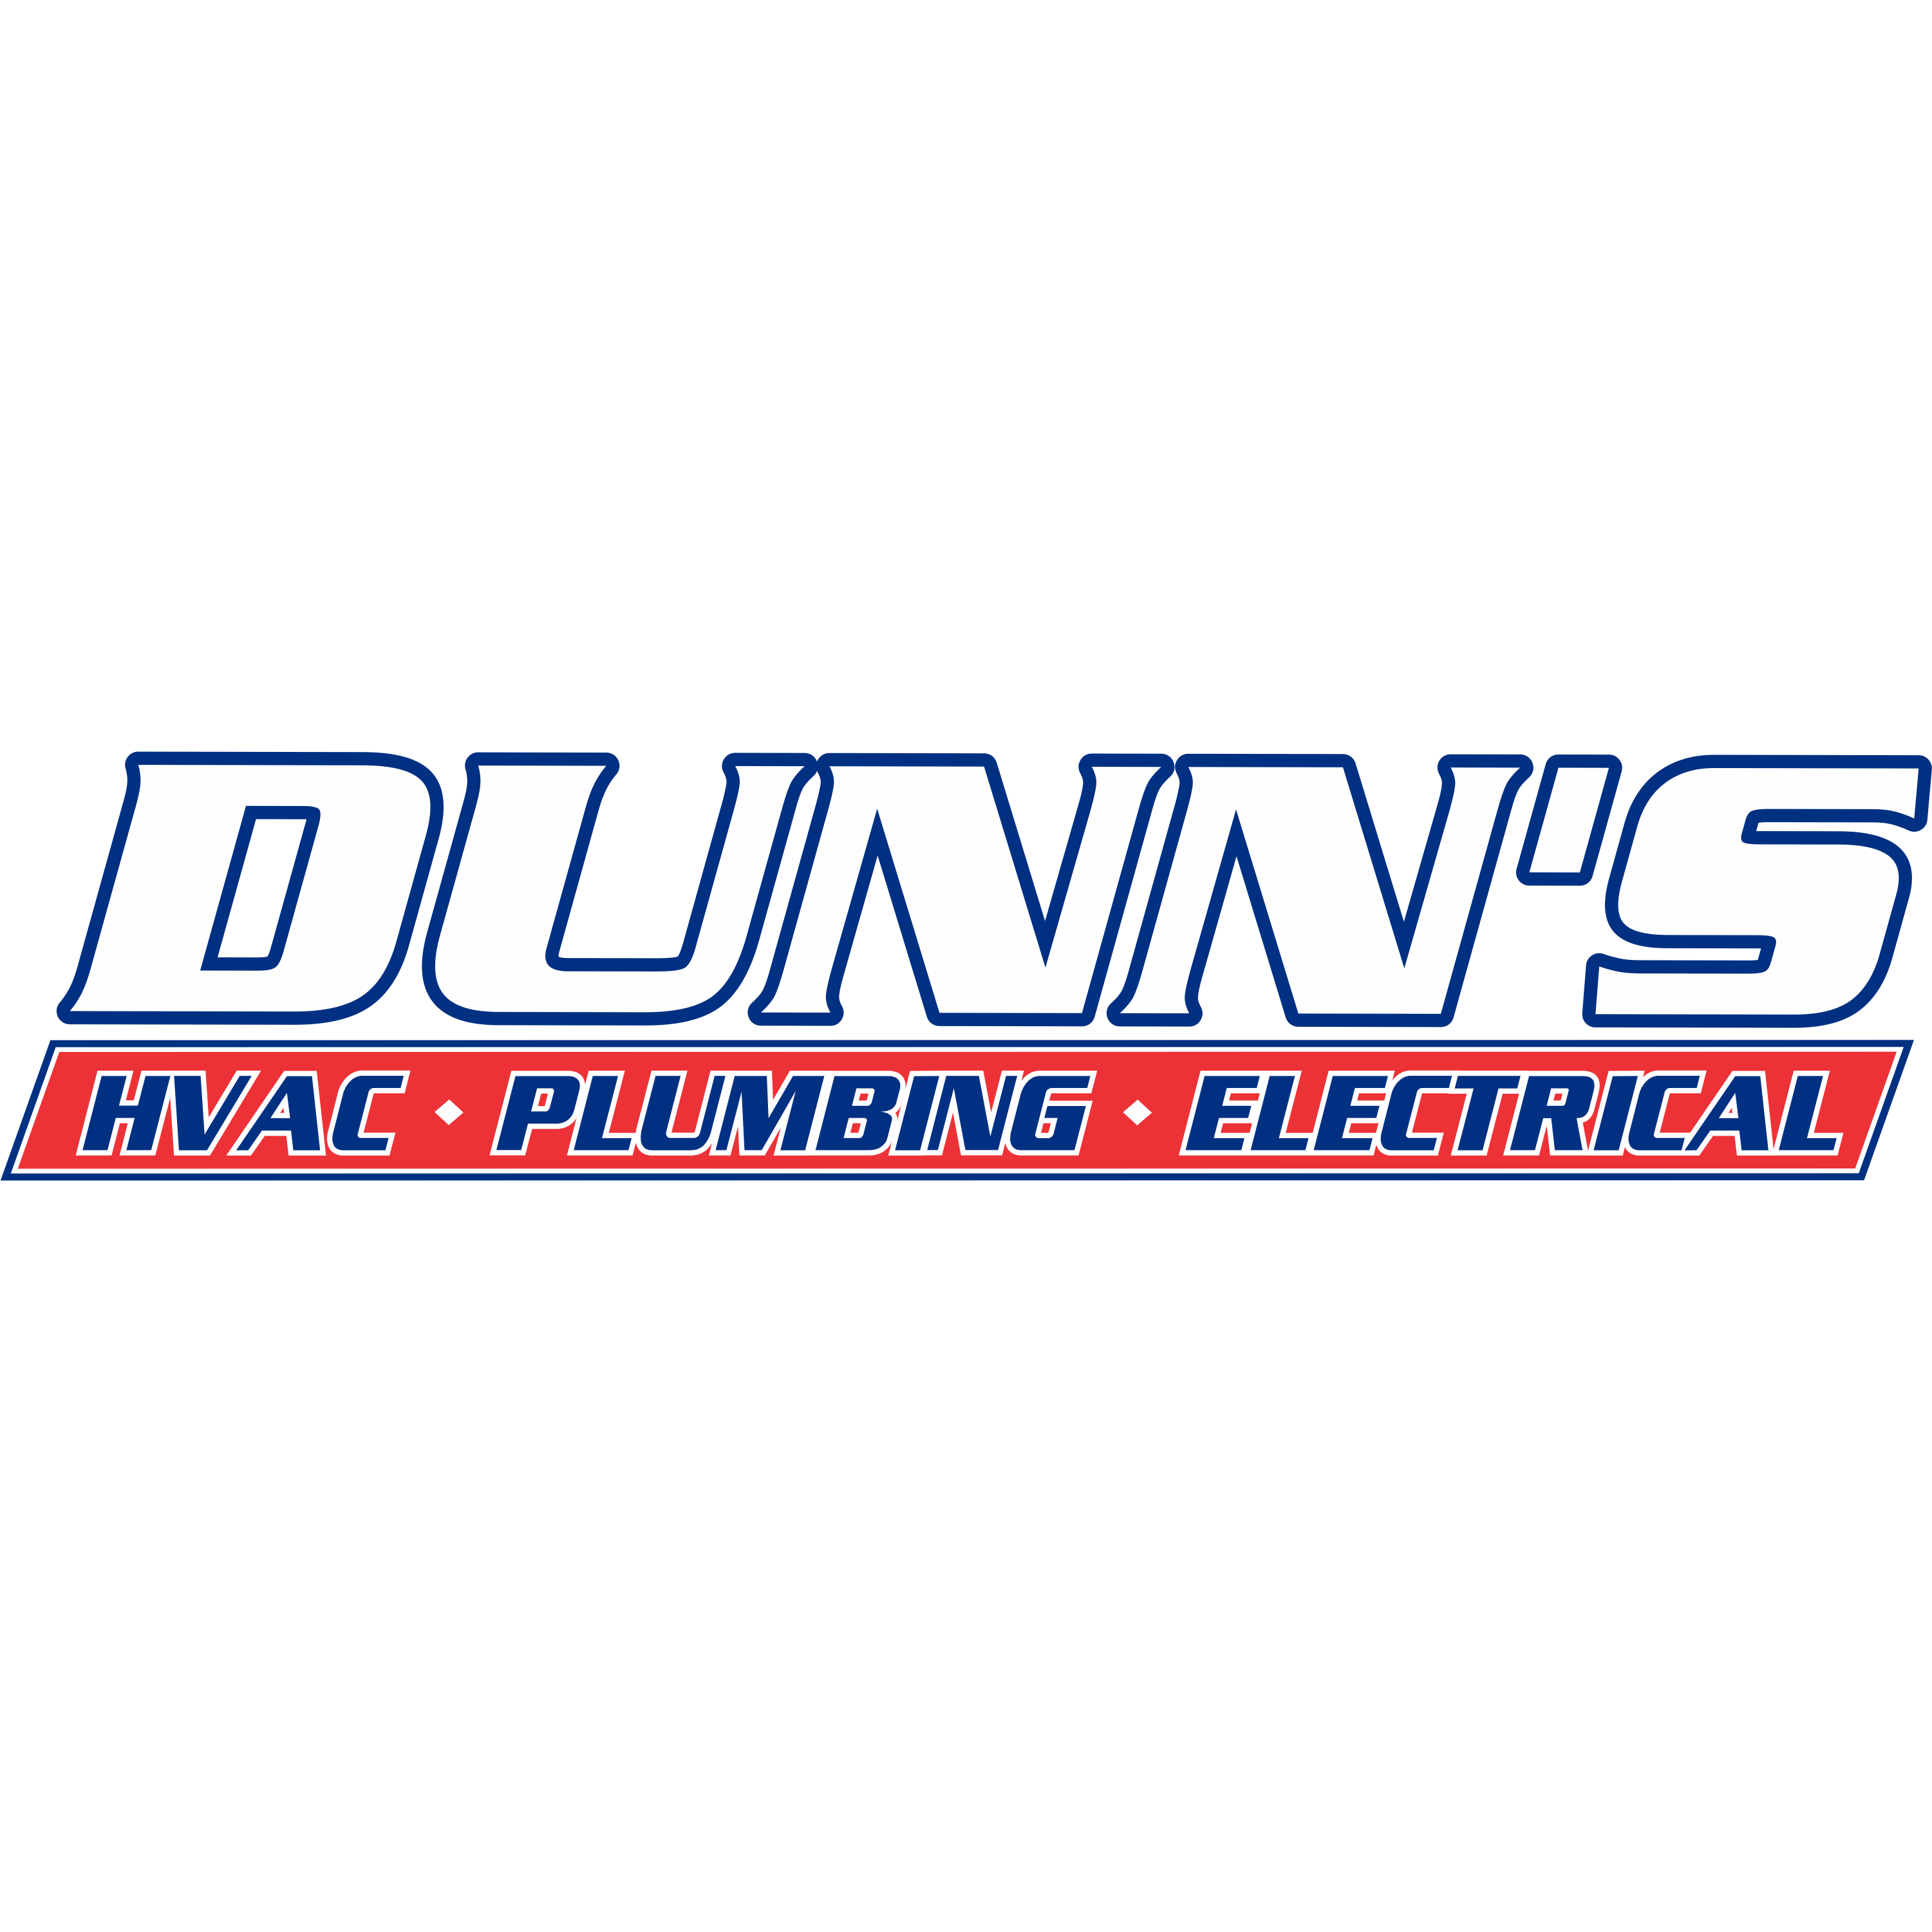 Dunn's HVAC, Plumbing & Electrical